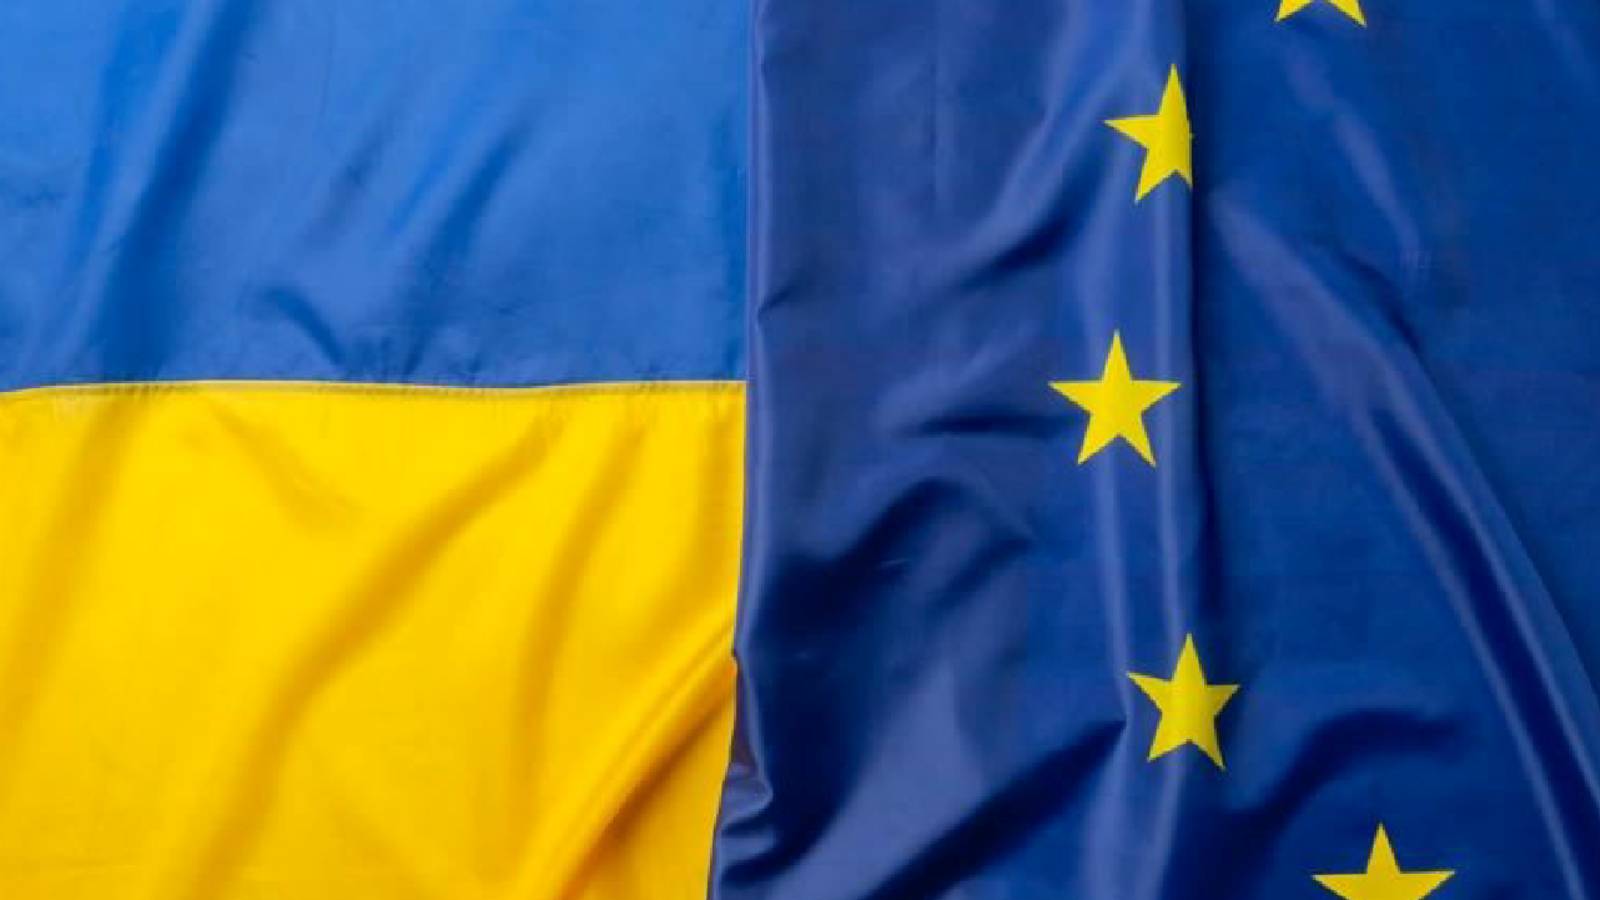 Comisia Europeana Sprijinul Oferit Ucrainei in Razboiul cu Rusia